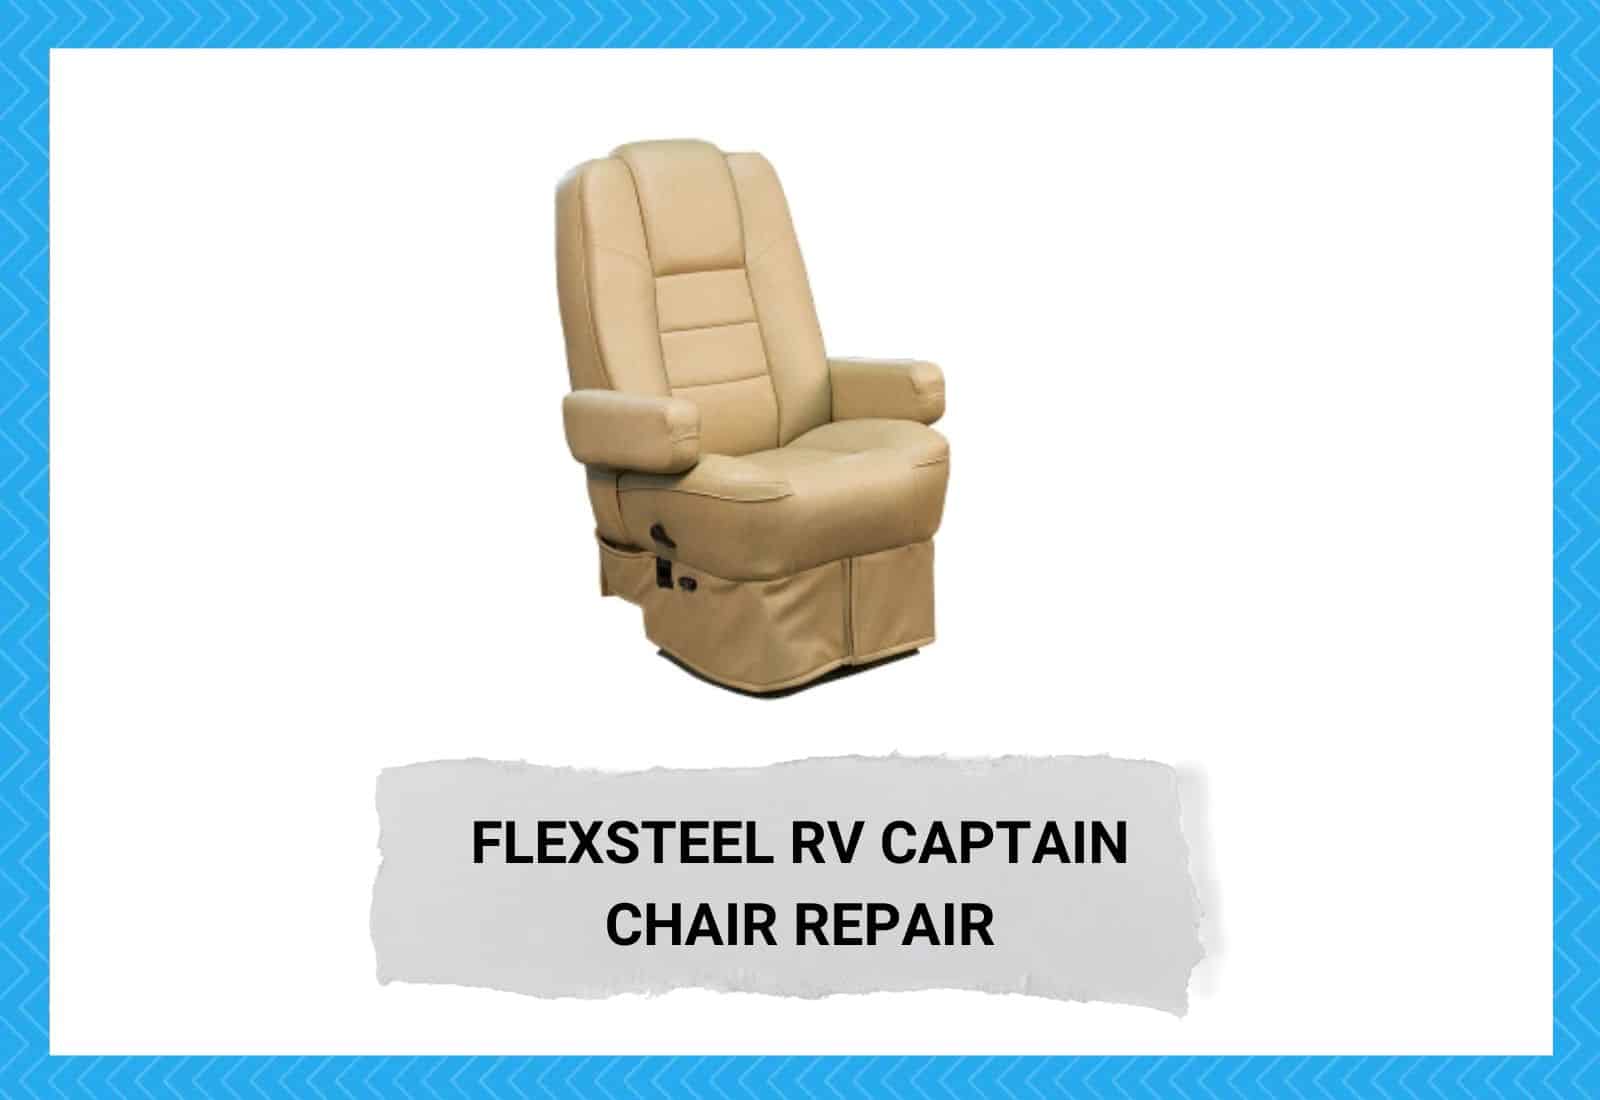 Flexsteel RV Captain Chair Repair